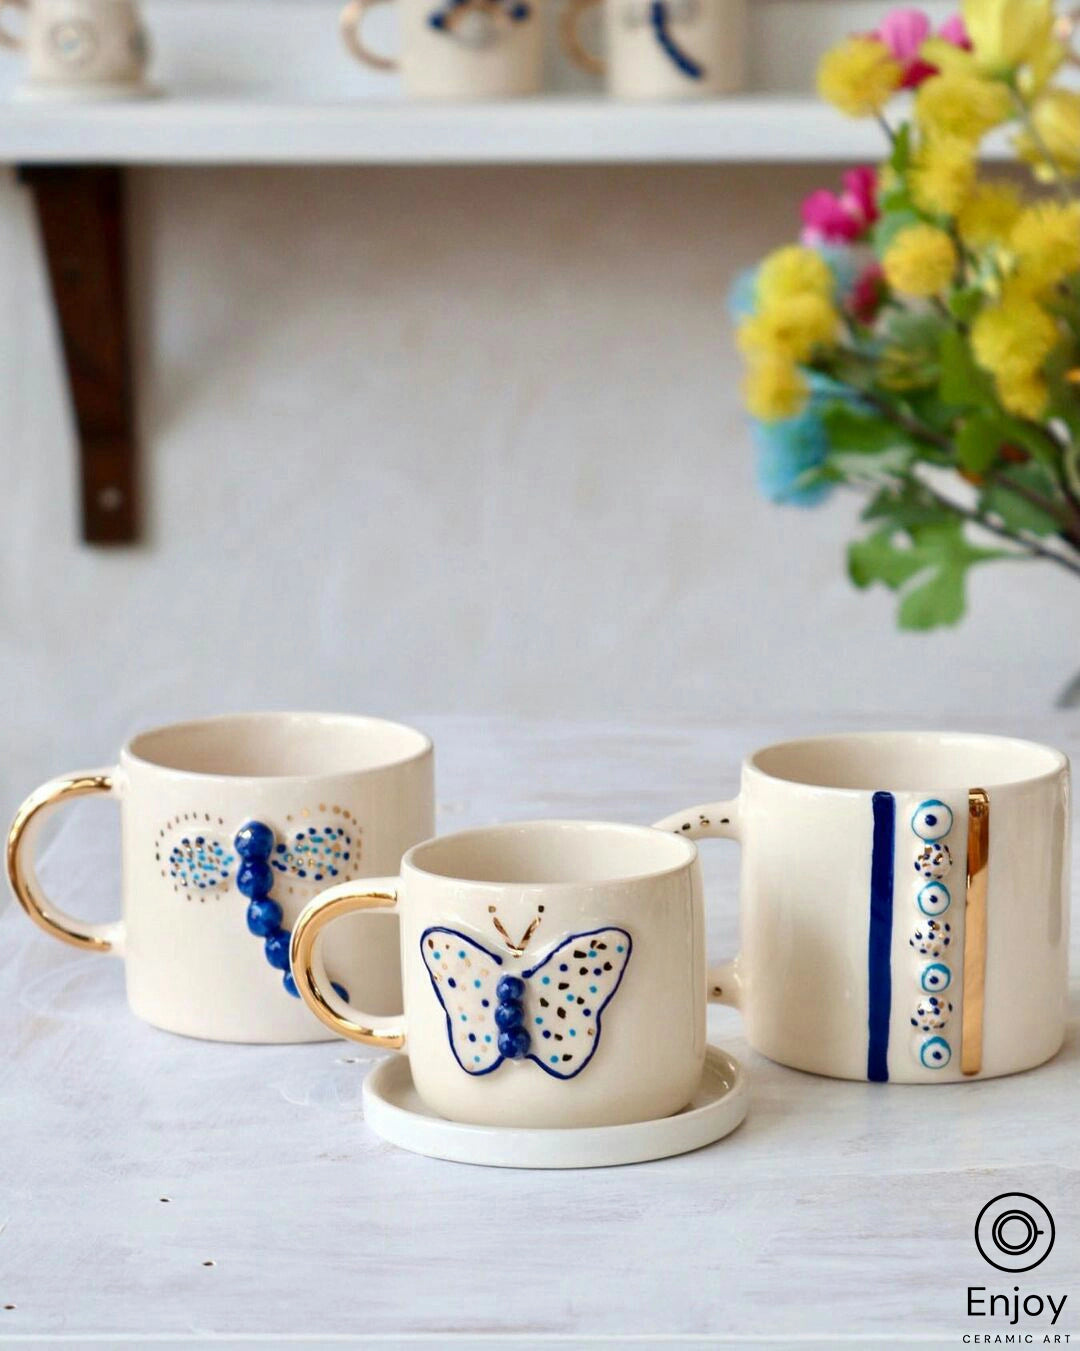 Blue Way Mug: Handmade Ceramic Coffee Mug with Blue Evil Eye Design & Gold Details - Unique Hand Thrown 10 oz Pottery Coffee Cup